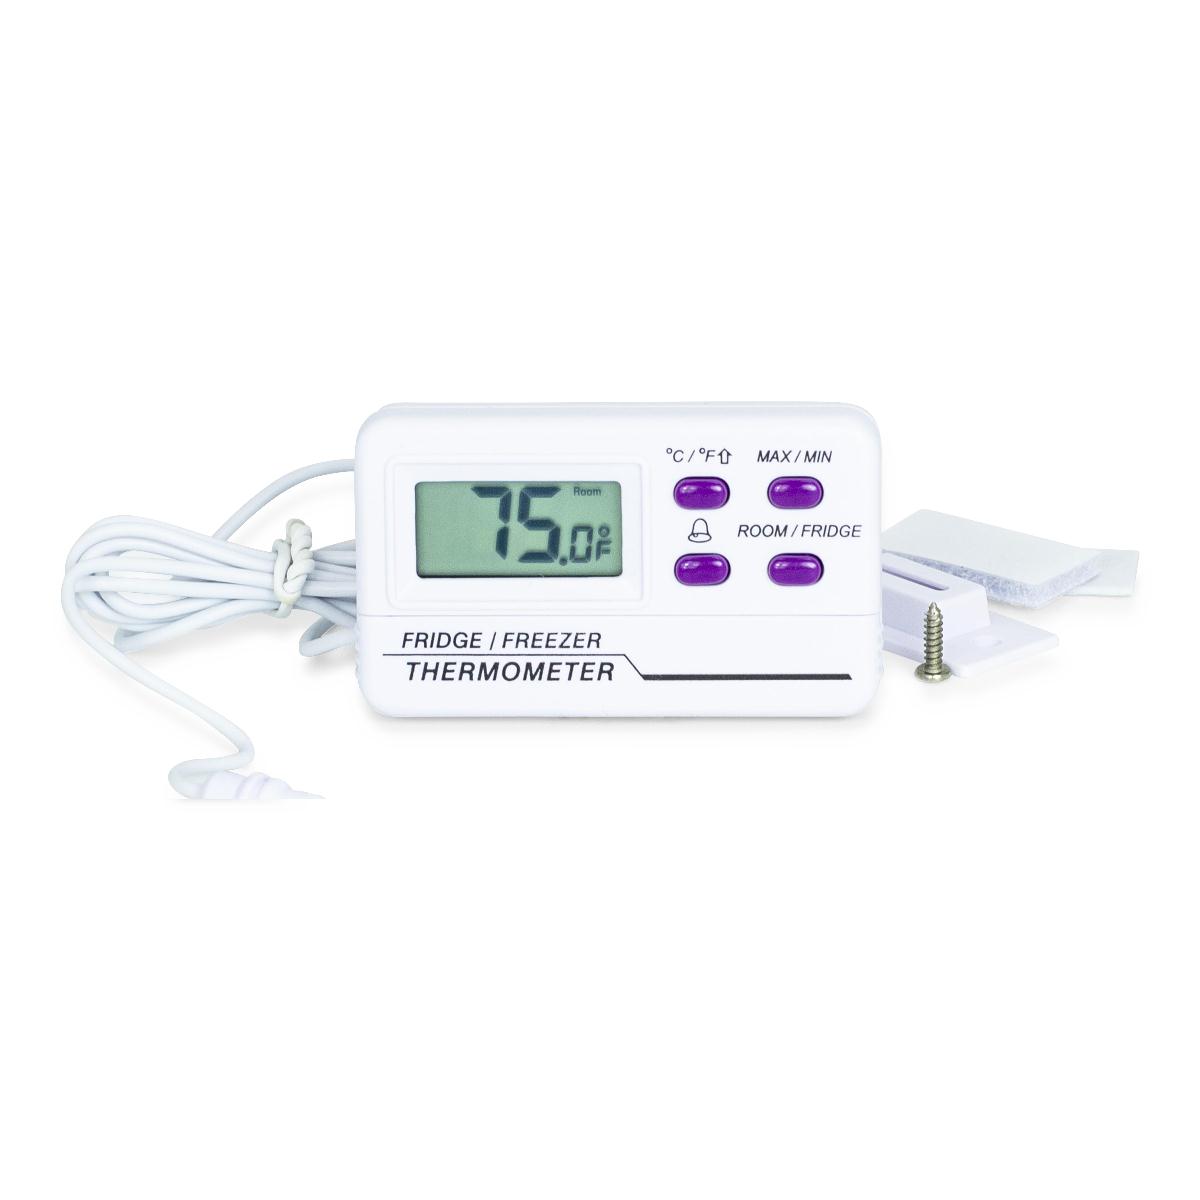 H-B Durac® Bi-Metallic Dial Thermometers